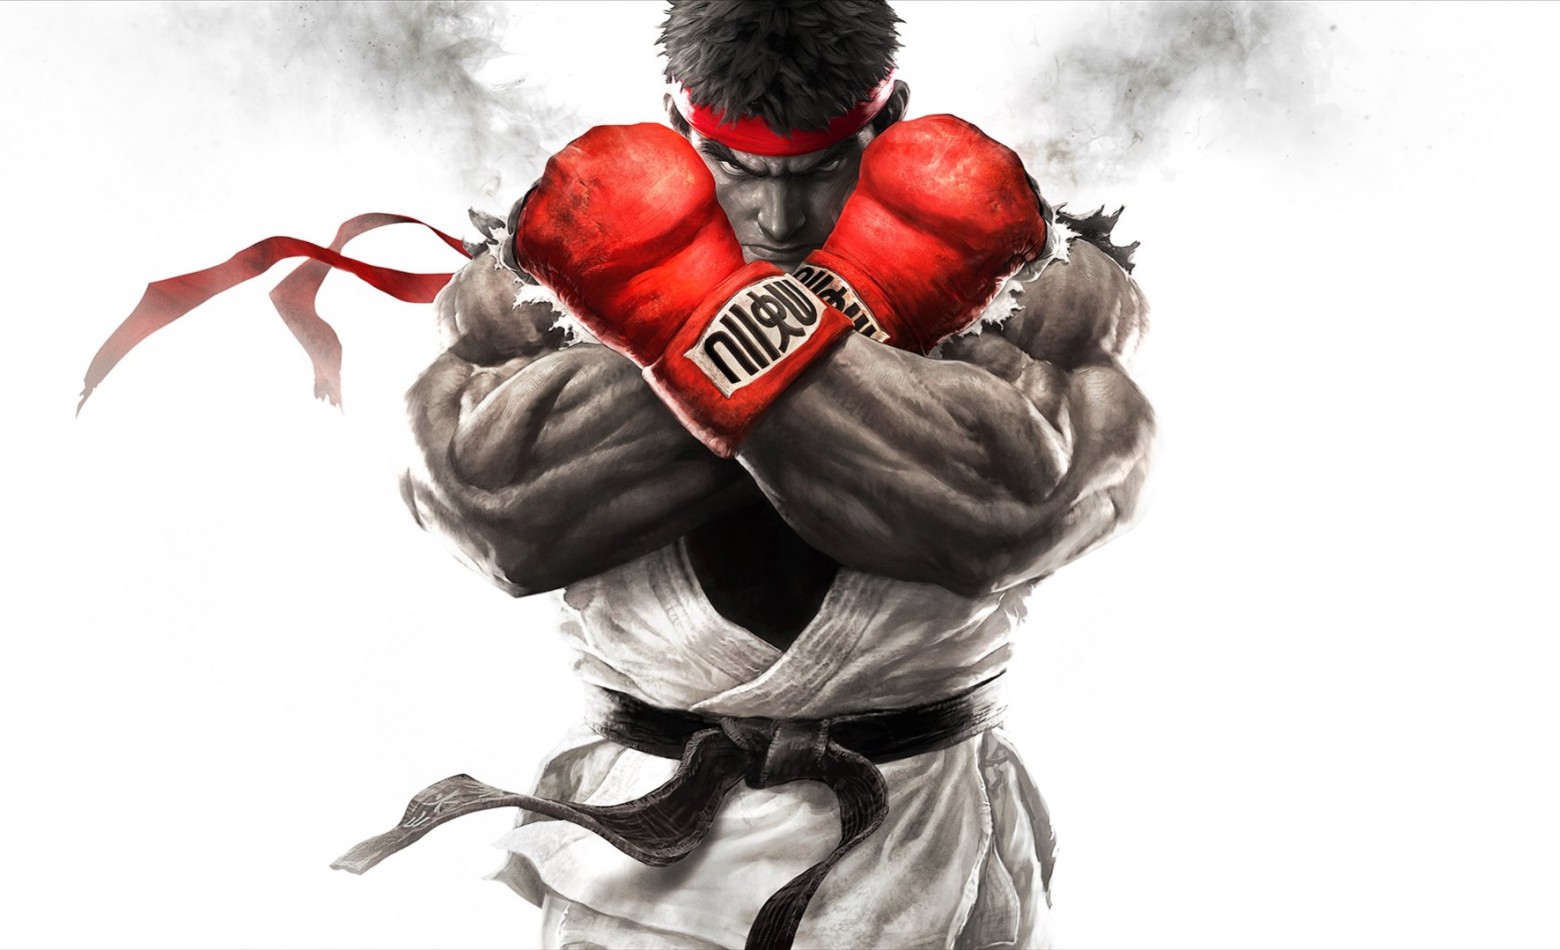 Street Fighter 5: exclusividade é “coisa que acontece”, diz executivo da Microsoft [Atualizado]